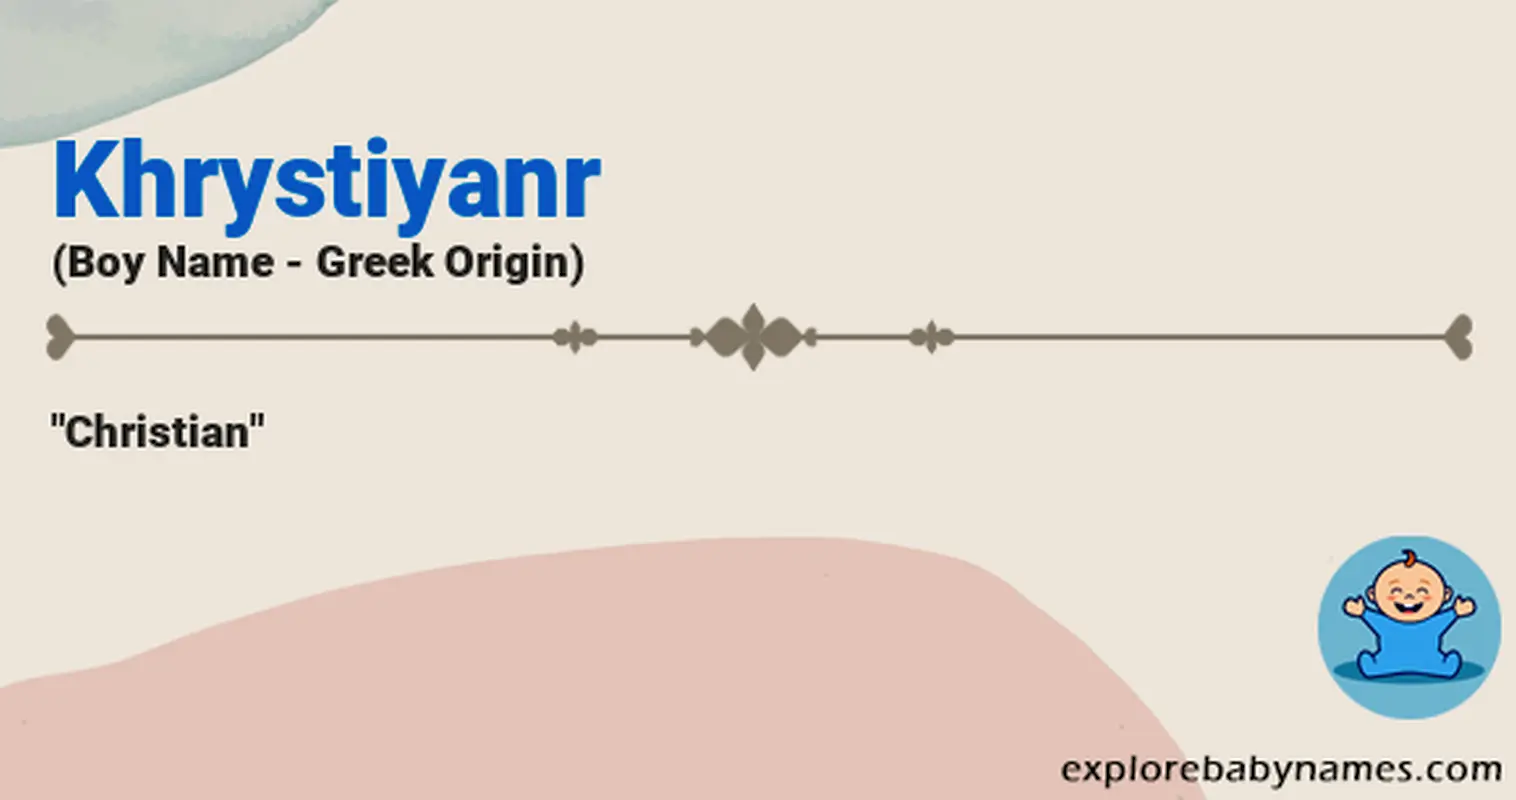 Meaning of Khrystiyanr